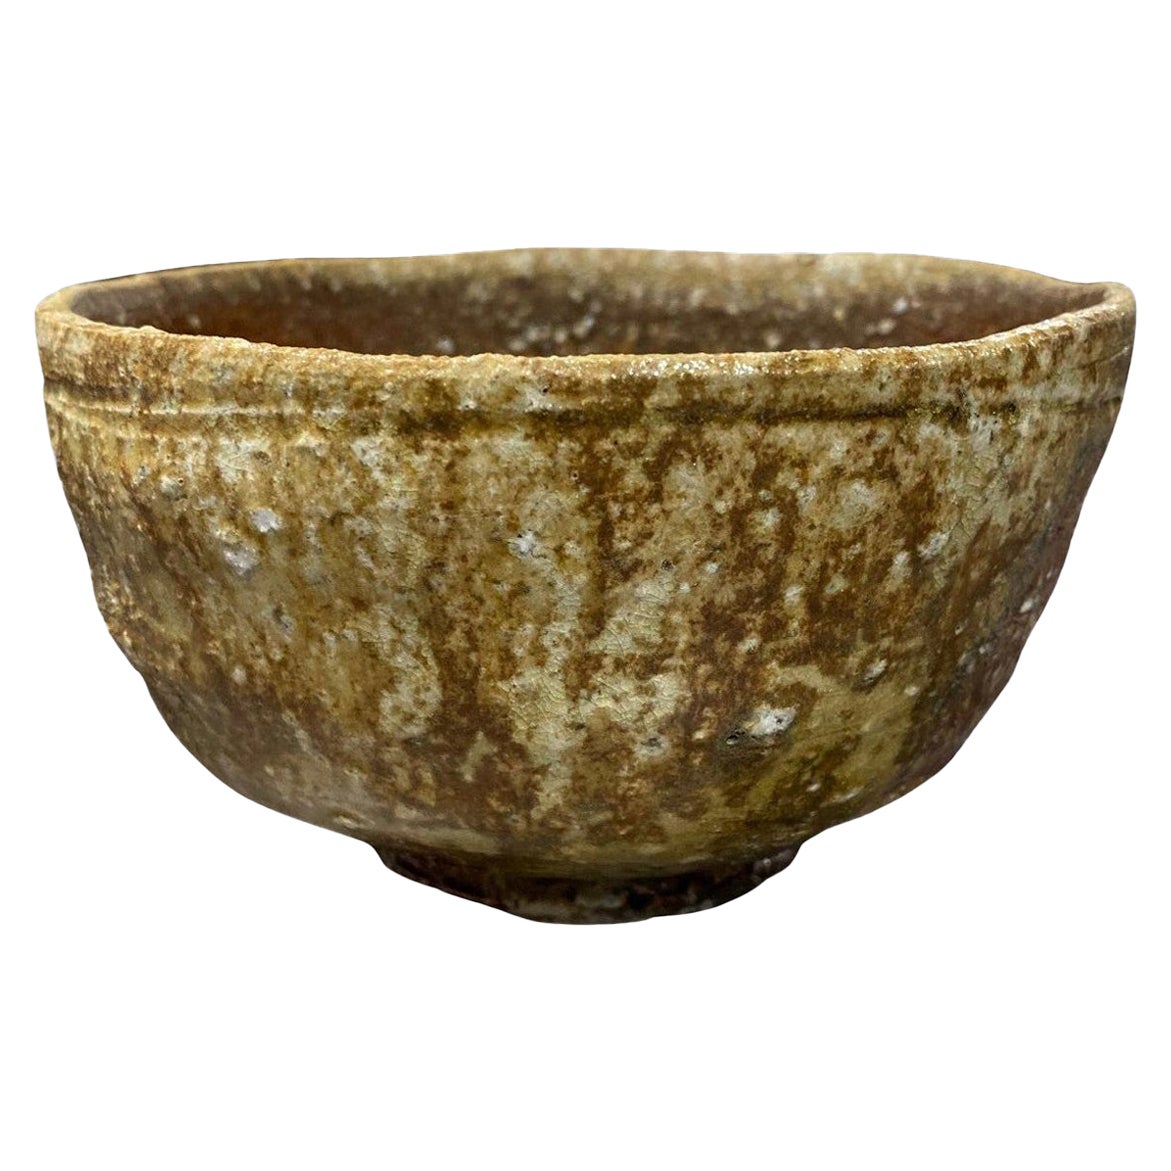 Rakusai Takahashi III Signed Japanese Shigaraki Pottery Chawan Tea Bowl with Box